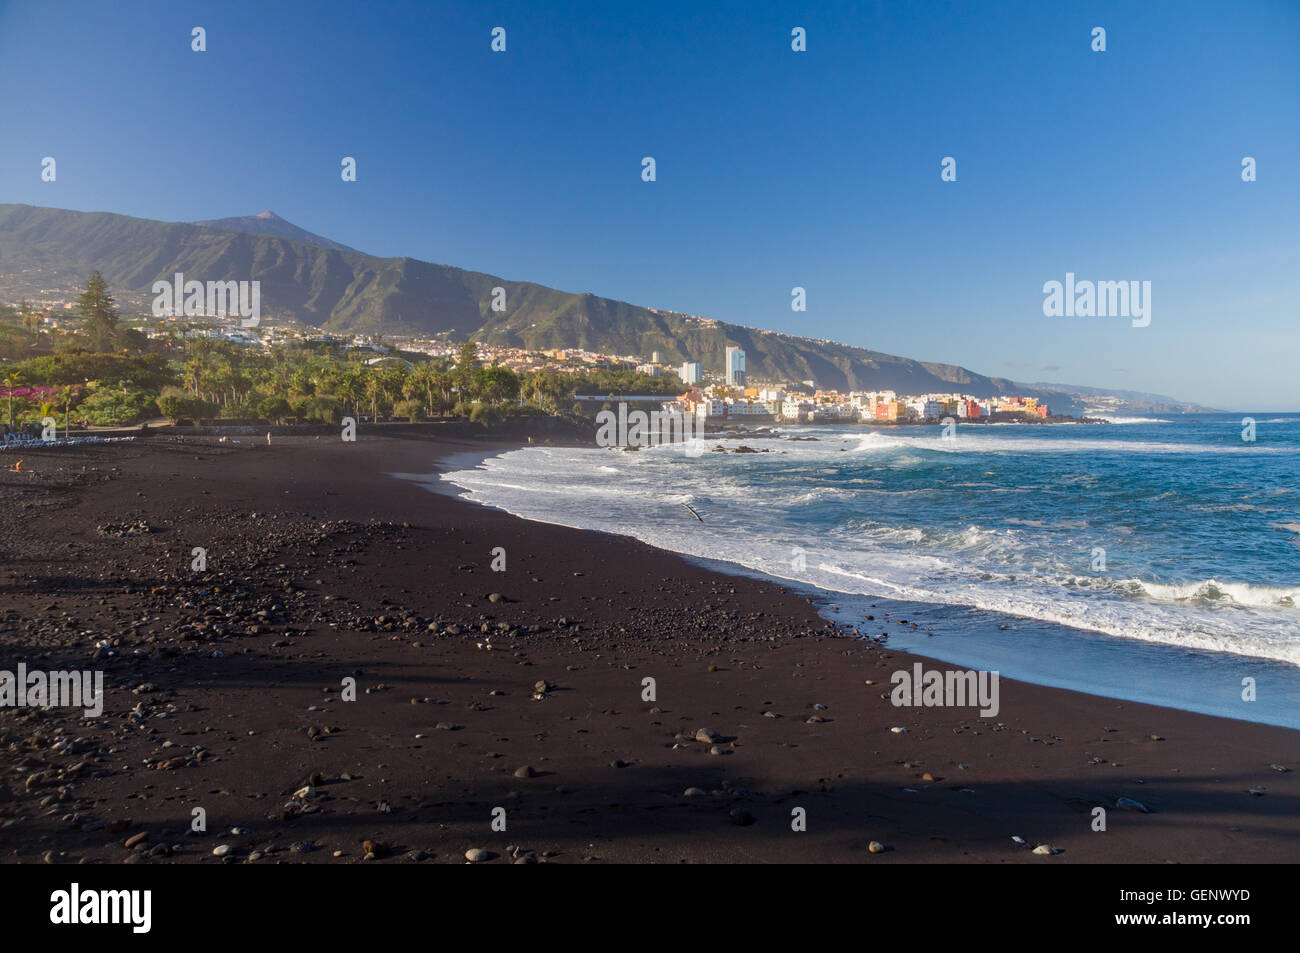 Playa Jardin beach against El Teide volcano, Puerto de la Cruz, Tenerife, Canary islands, Spain Stock Photo